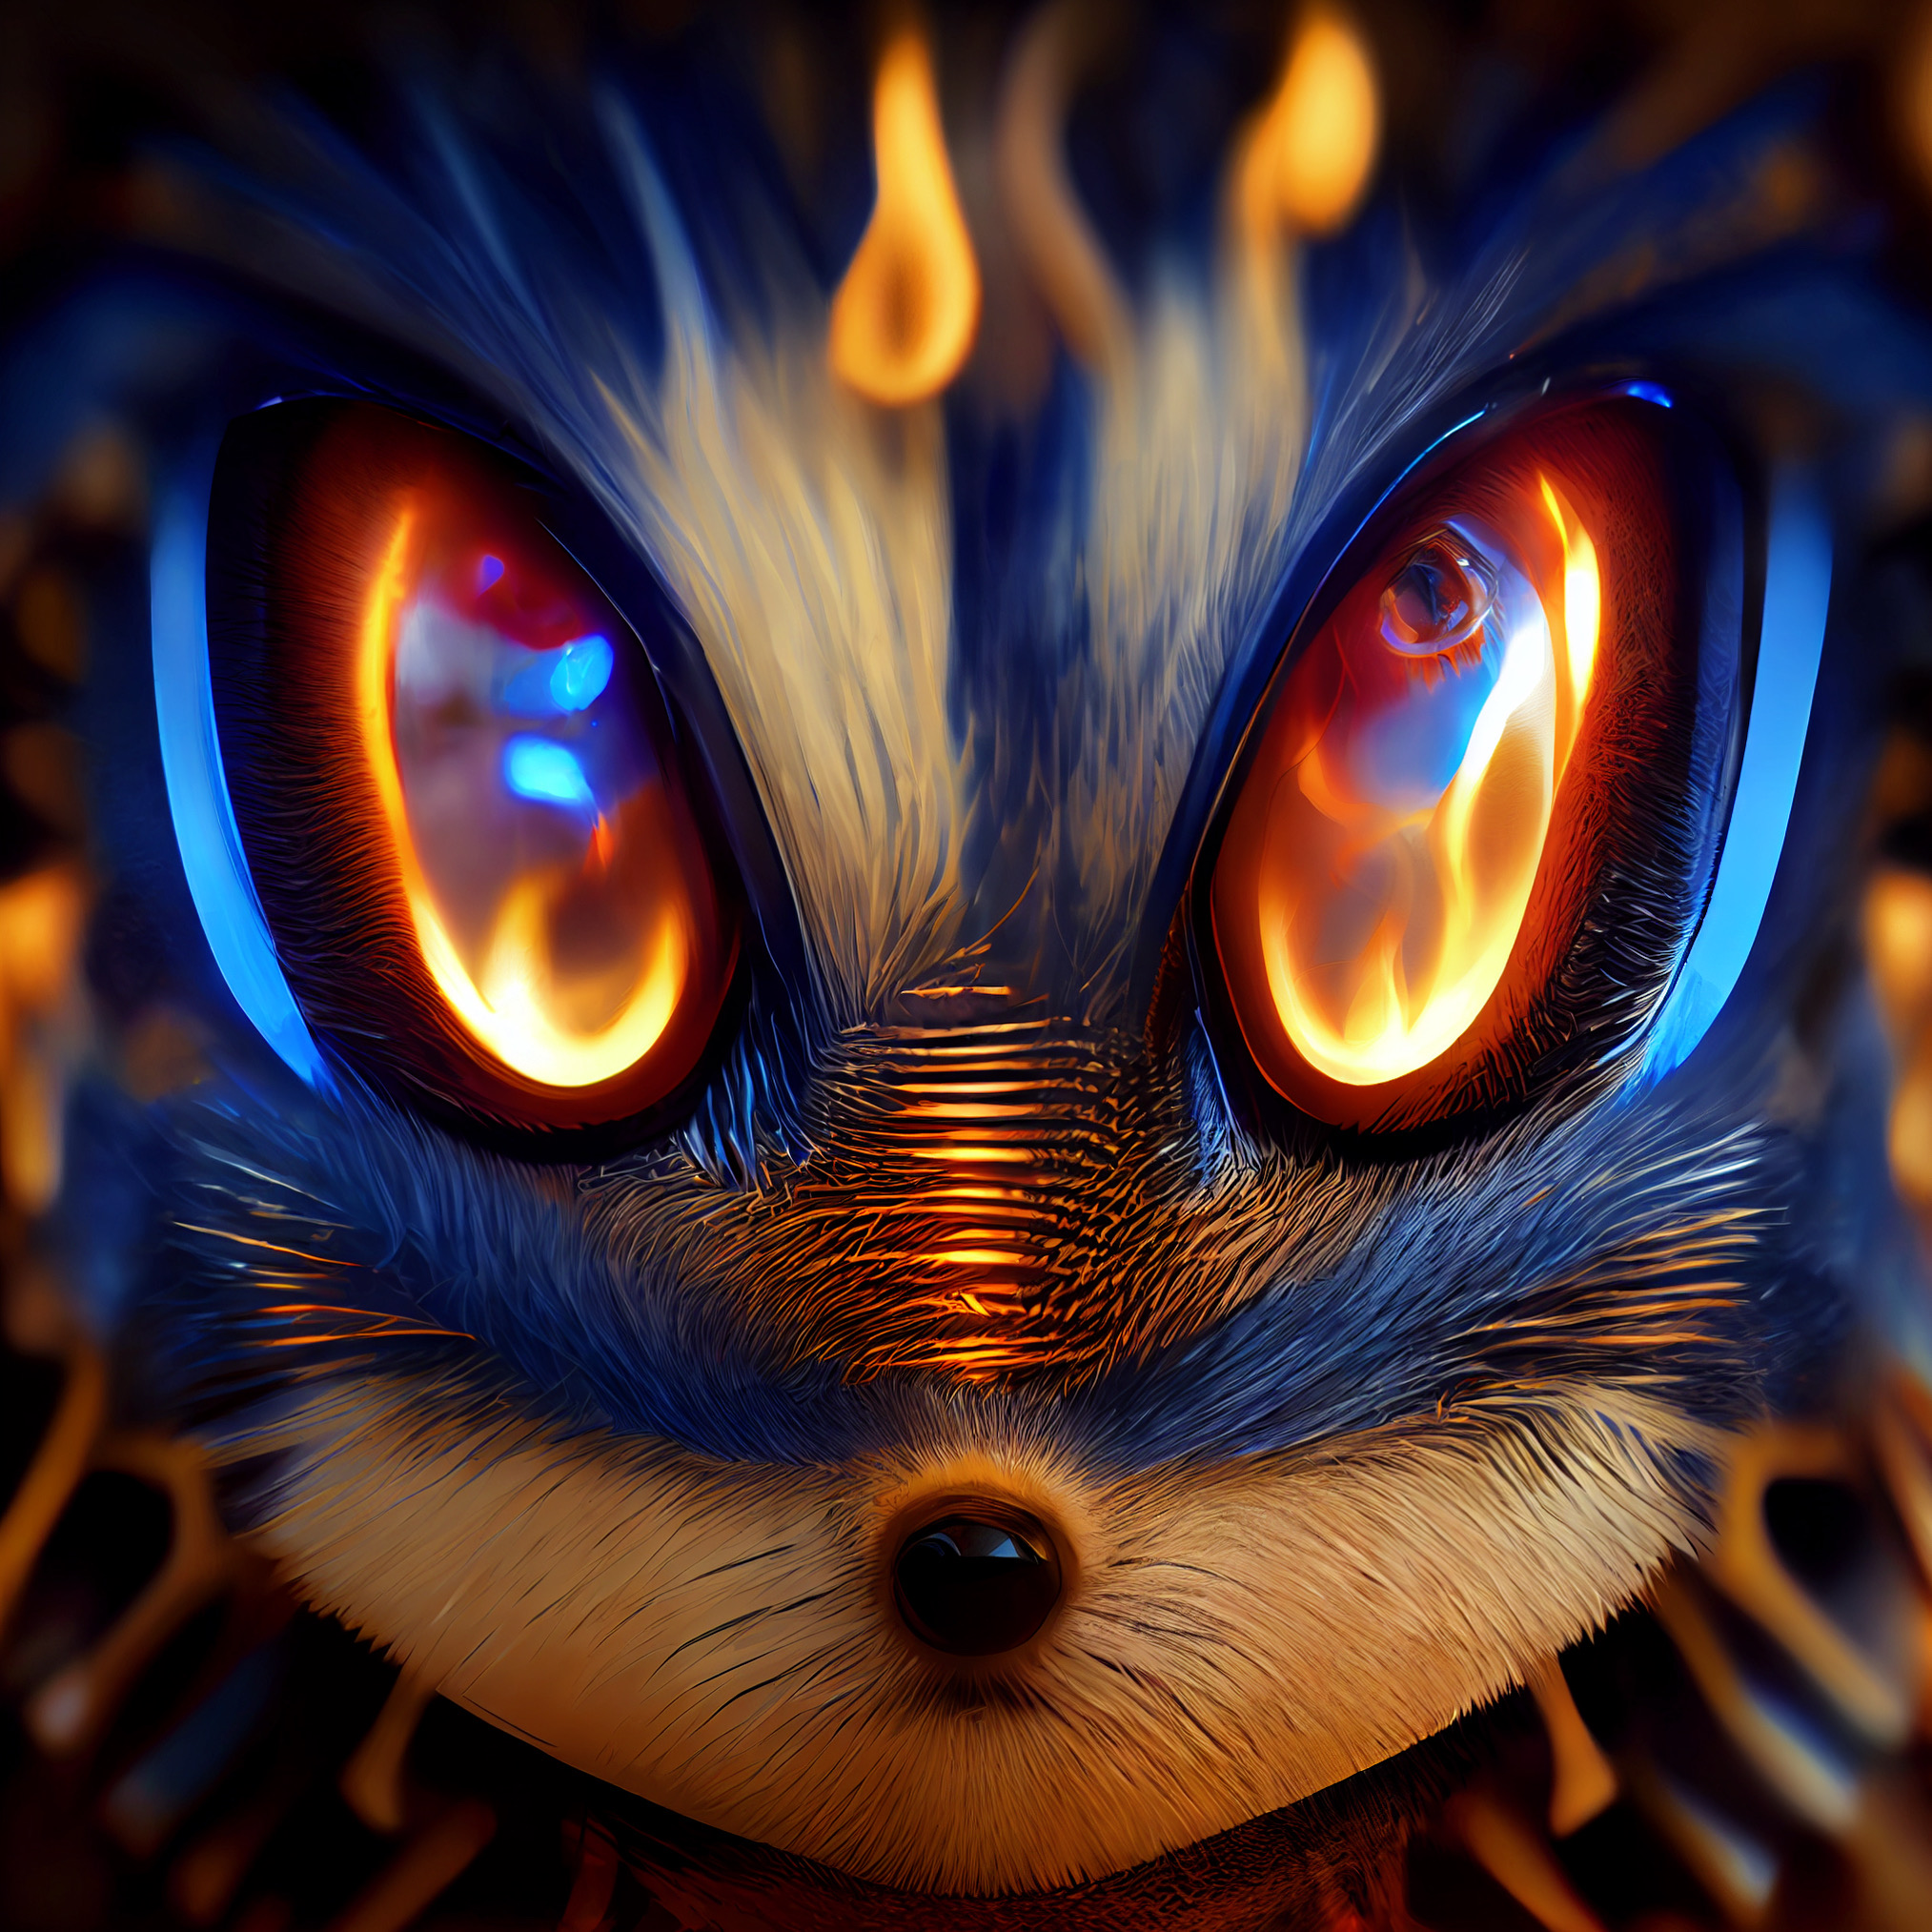 Robot Sonic the Hedgehog